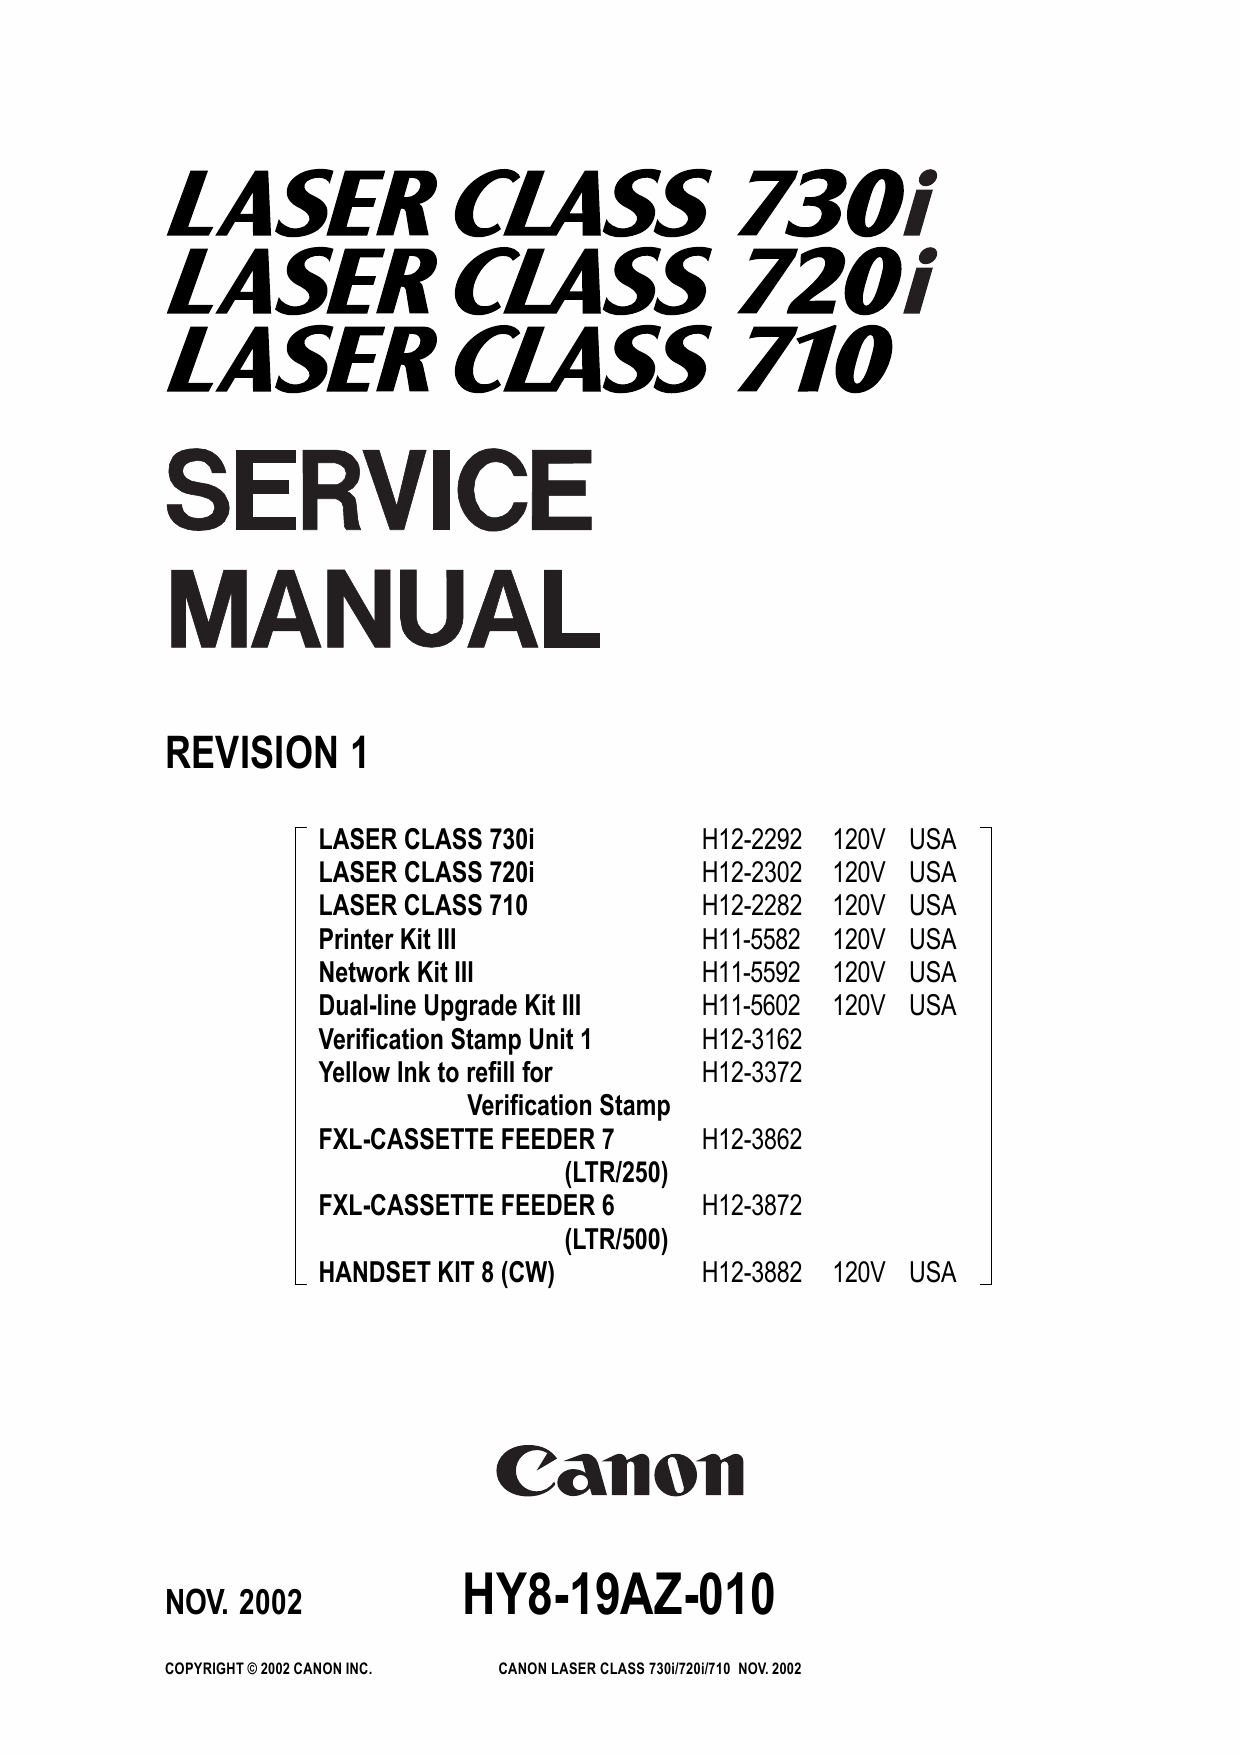 Canon imageCLASS LBP-730i 720i 710 Parts and Service Manual-1